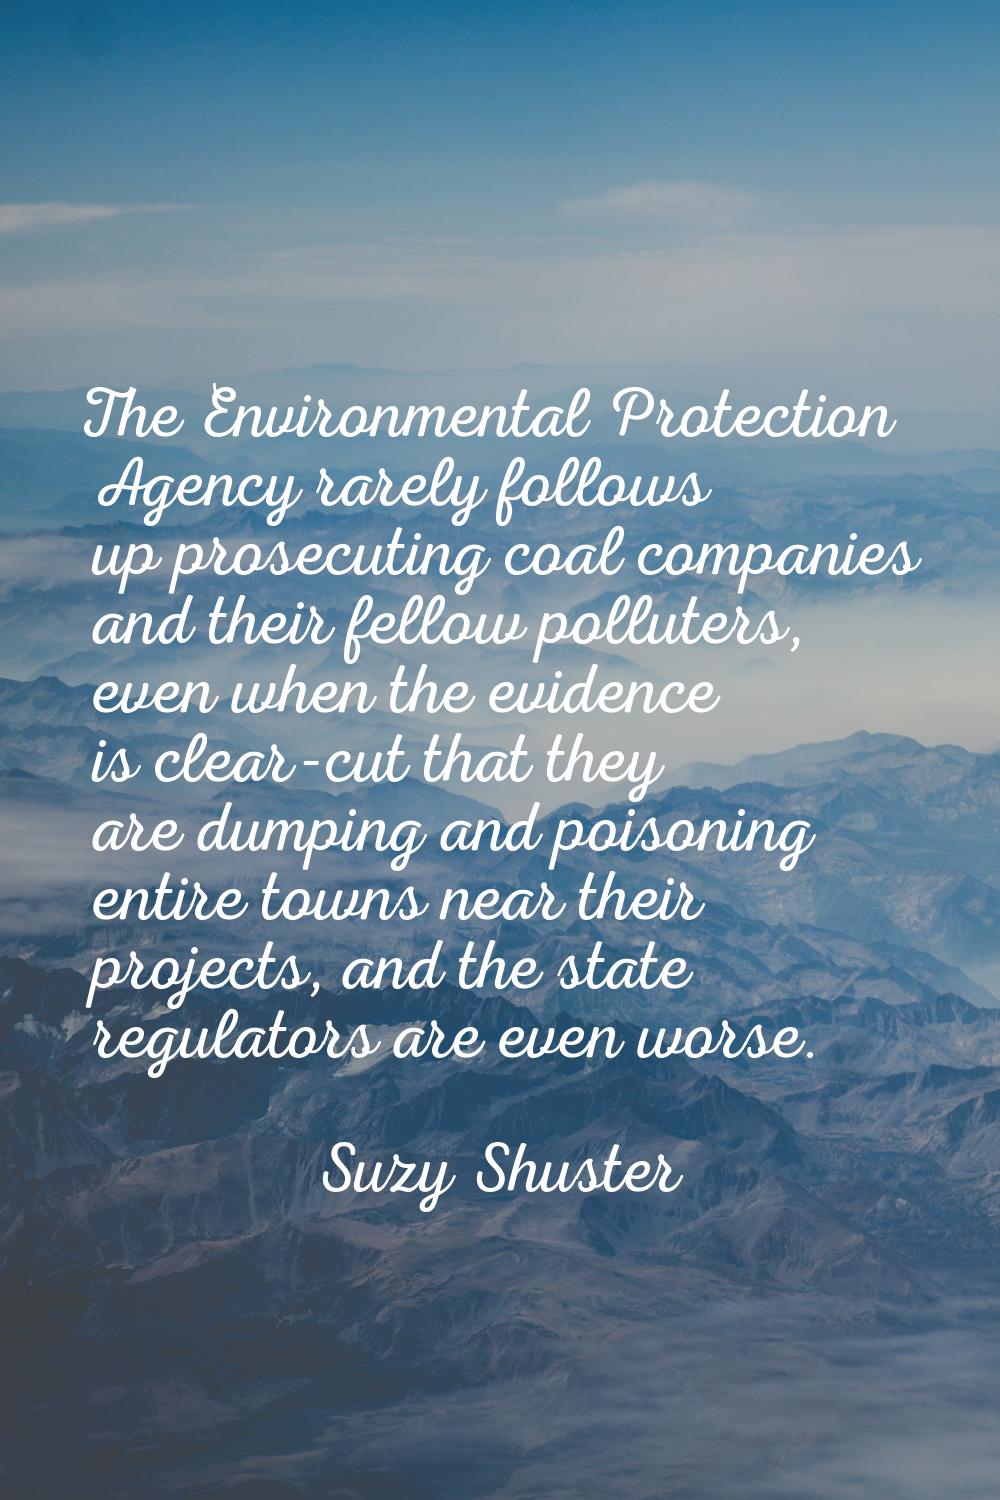 The Environmental Protection Agency rarely follows up prosecuting coal companies and their fellow p